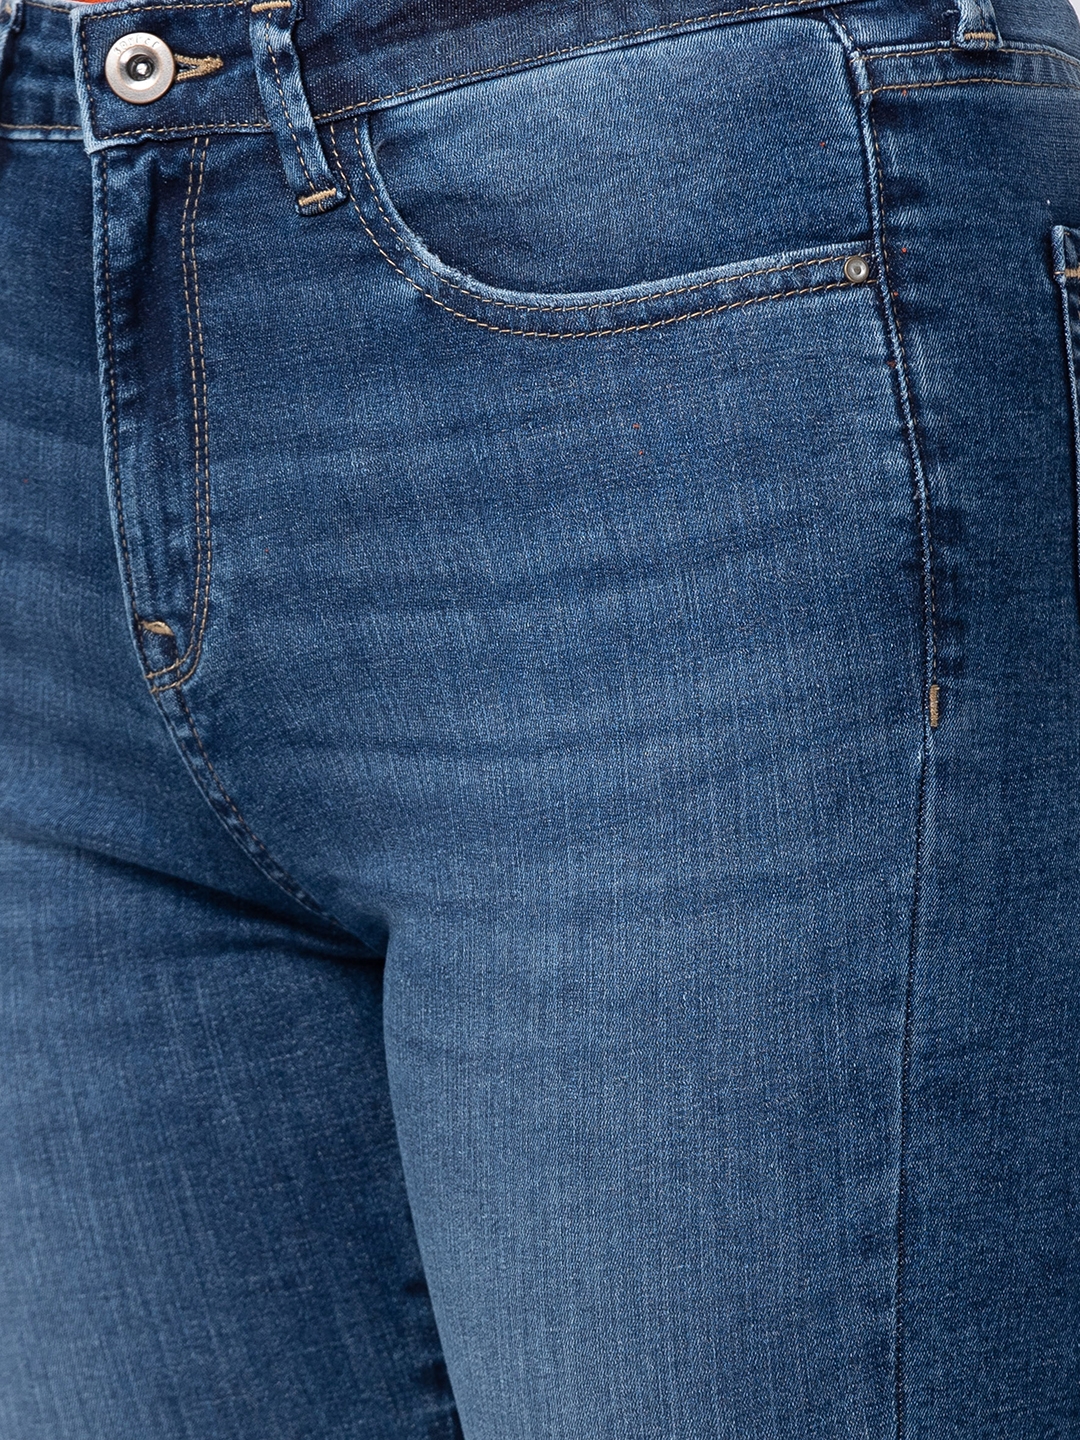 spykar | Women's Blue Cotton Solid Jeans 3